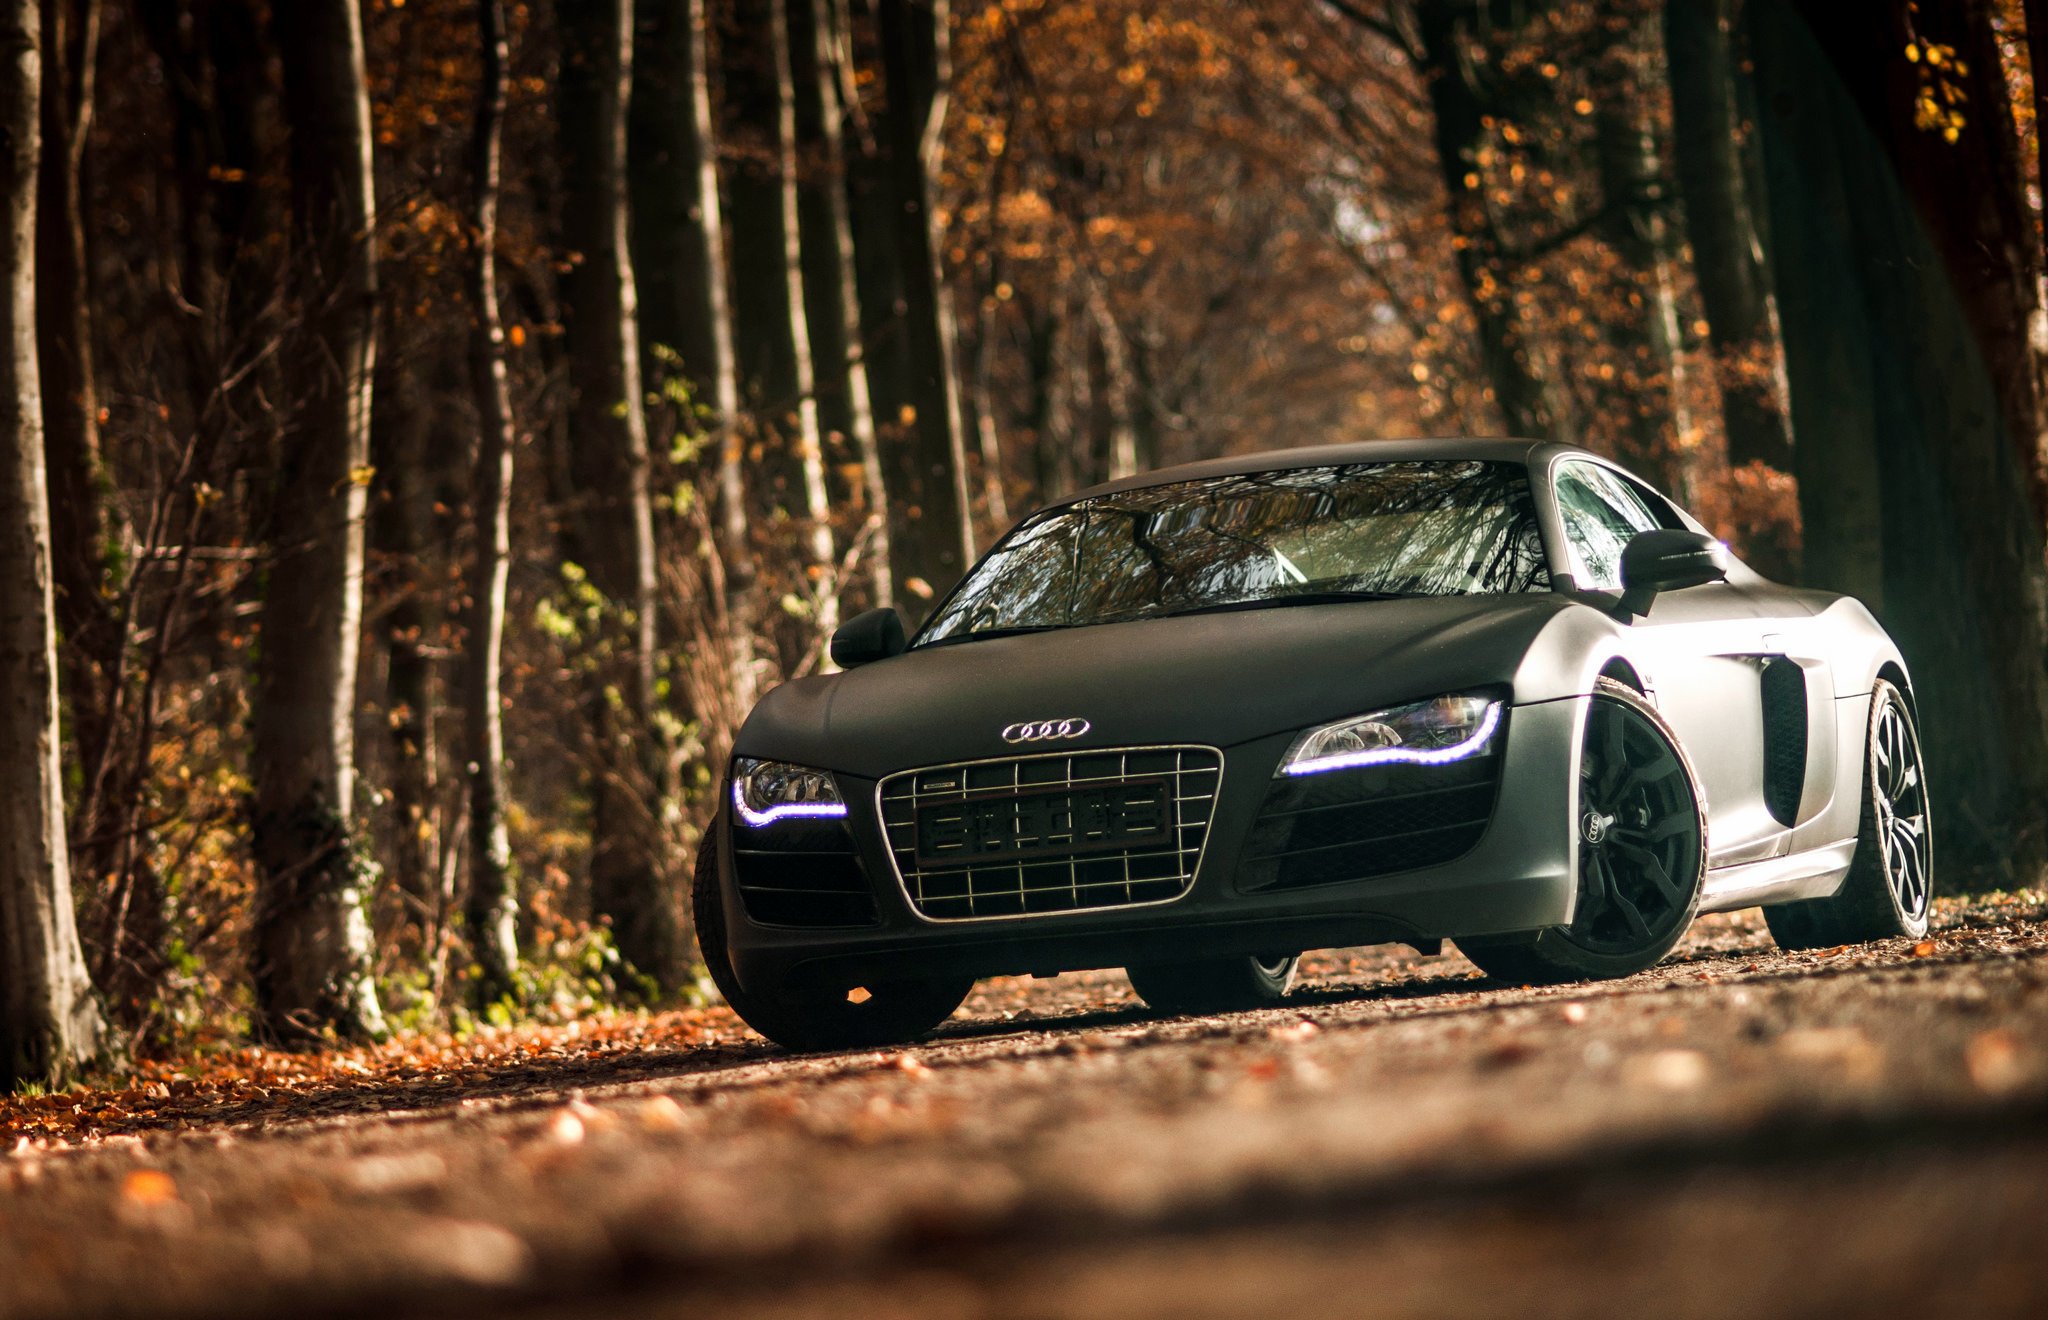 Обои на экран машины. Audi r8 1920 1080. Ауди р8 в лесу. Audi r8 v10 2020 Black. Audi r8 Full Black.